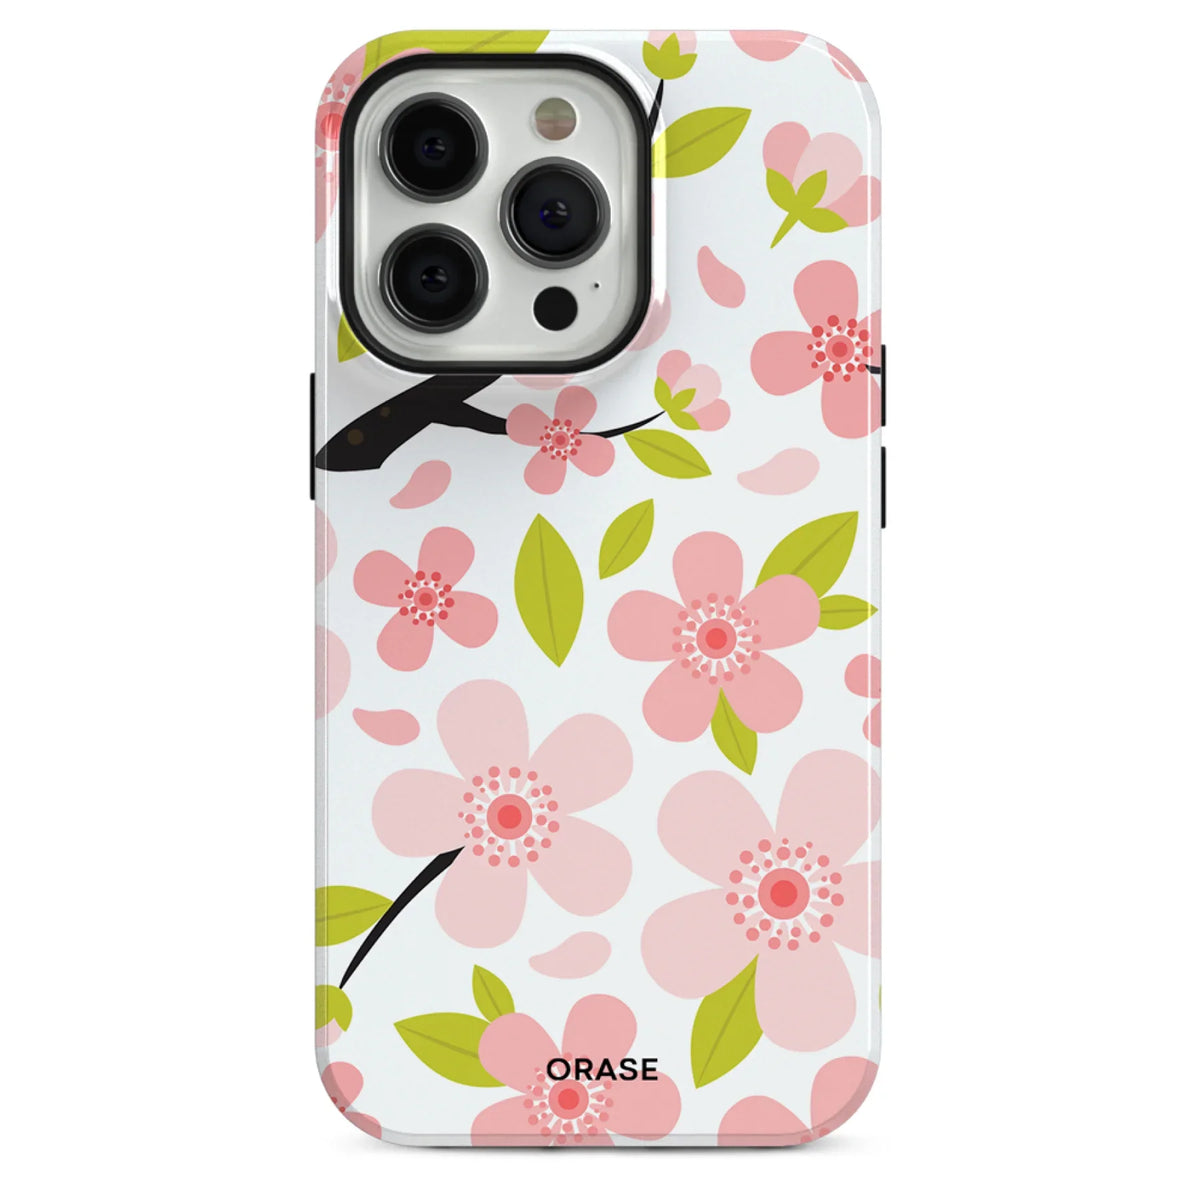 Peach Blossom iPhone Case - iPhone 12 Pro Max